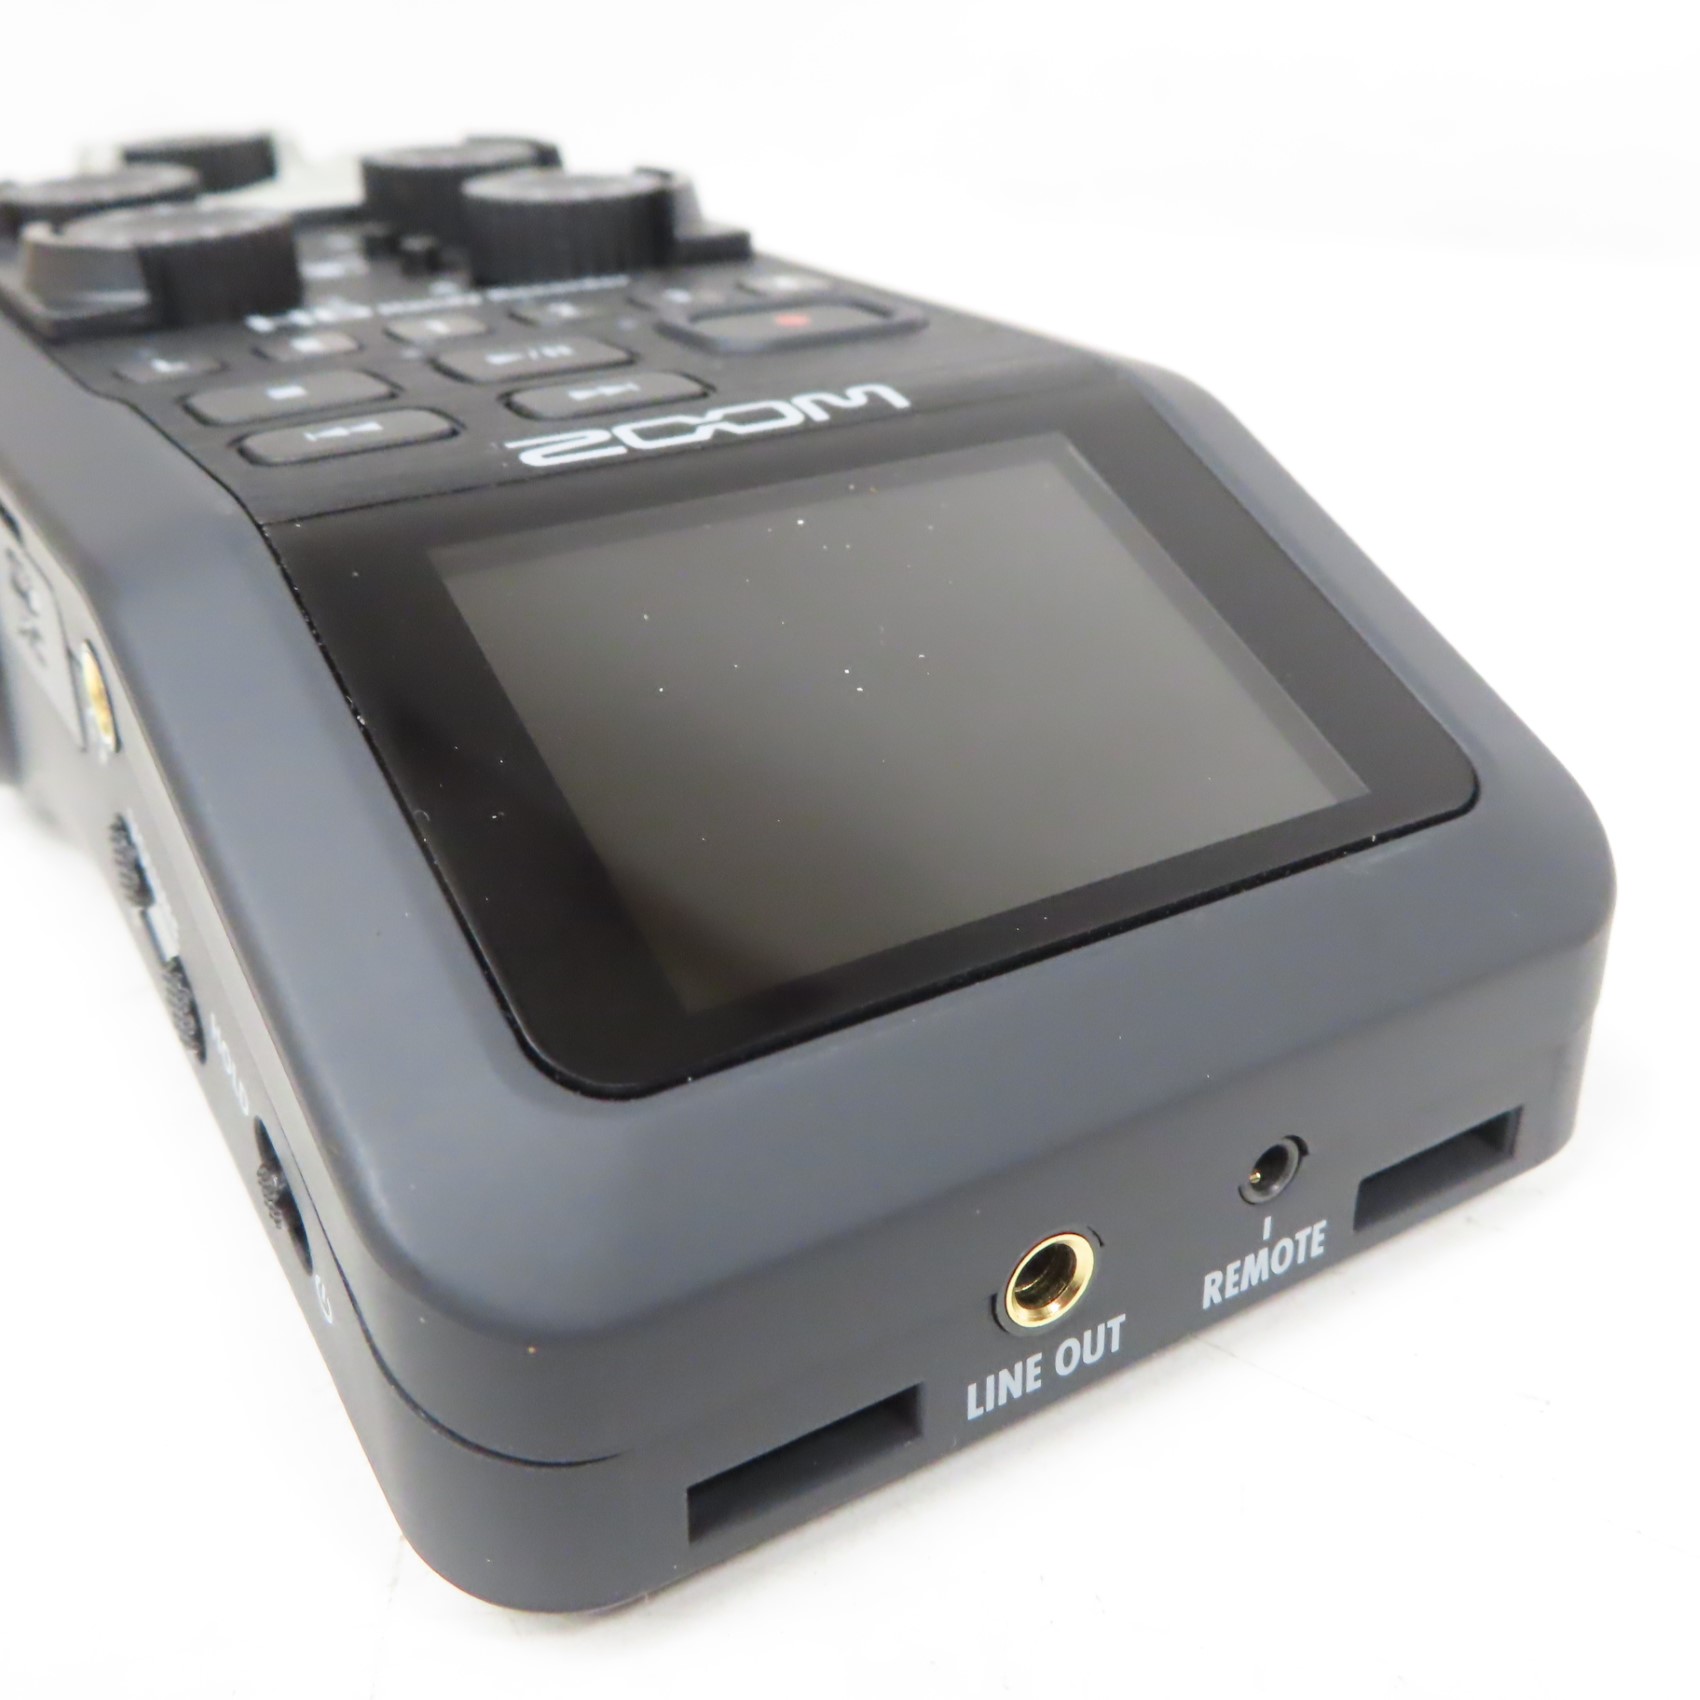 Zoom H6 Black - Multi-Track Handy Recorder